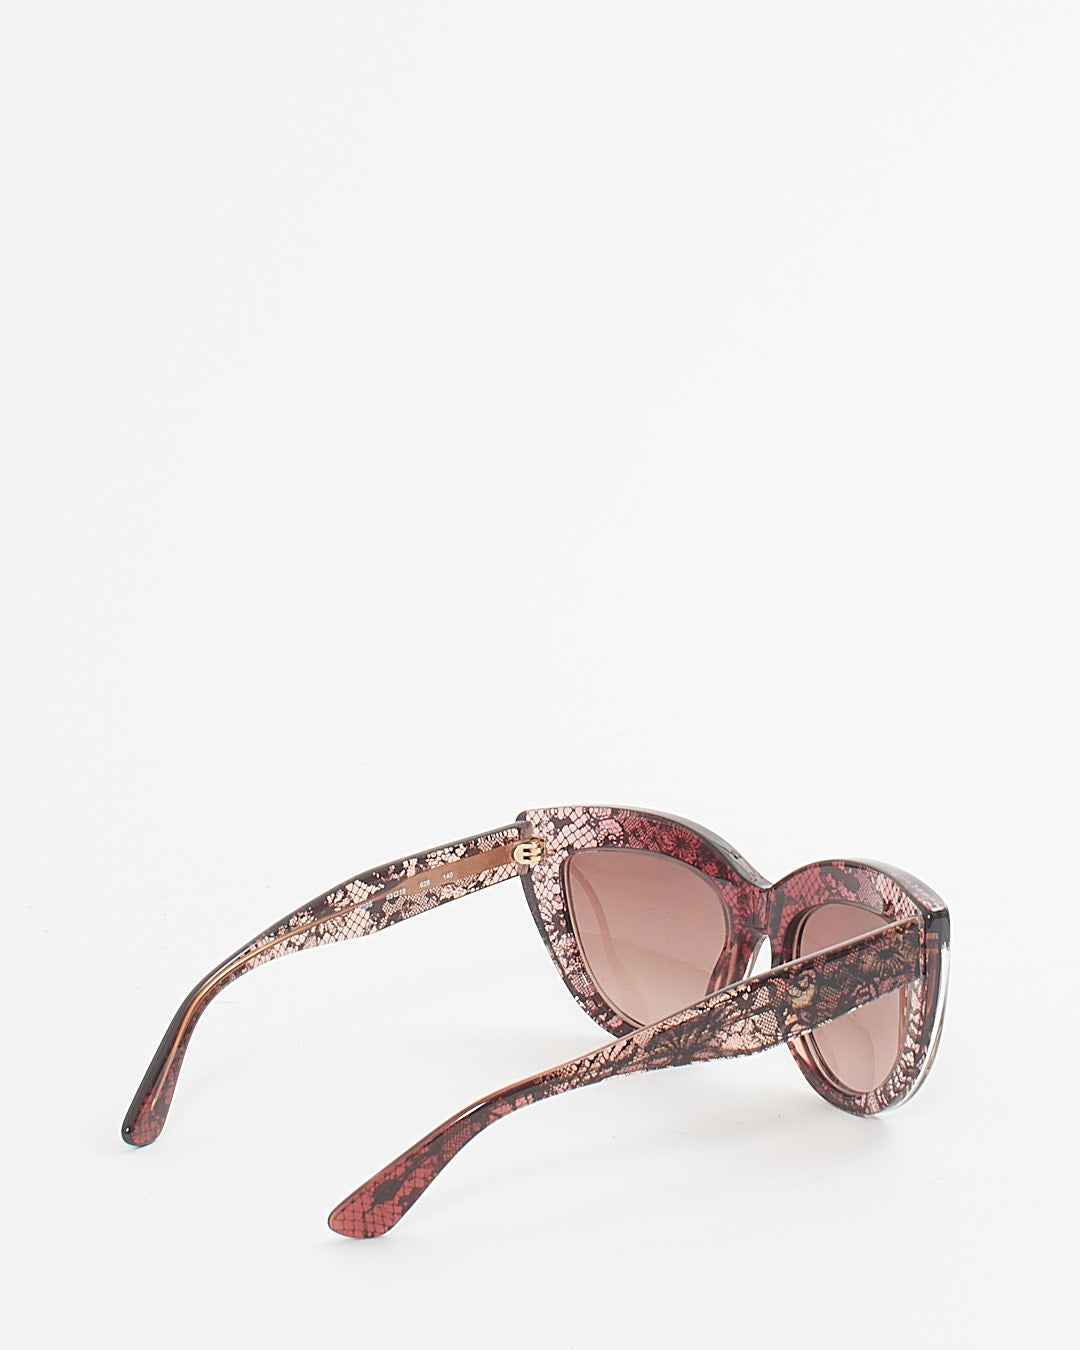 Valentino Bordeaux Faded Lace V709S Cat Eye Sunglasses